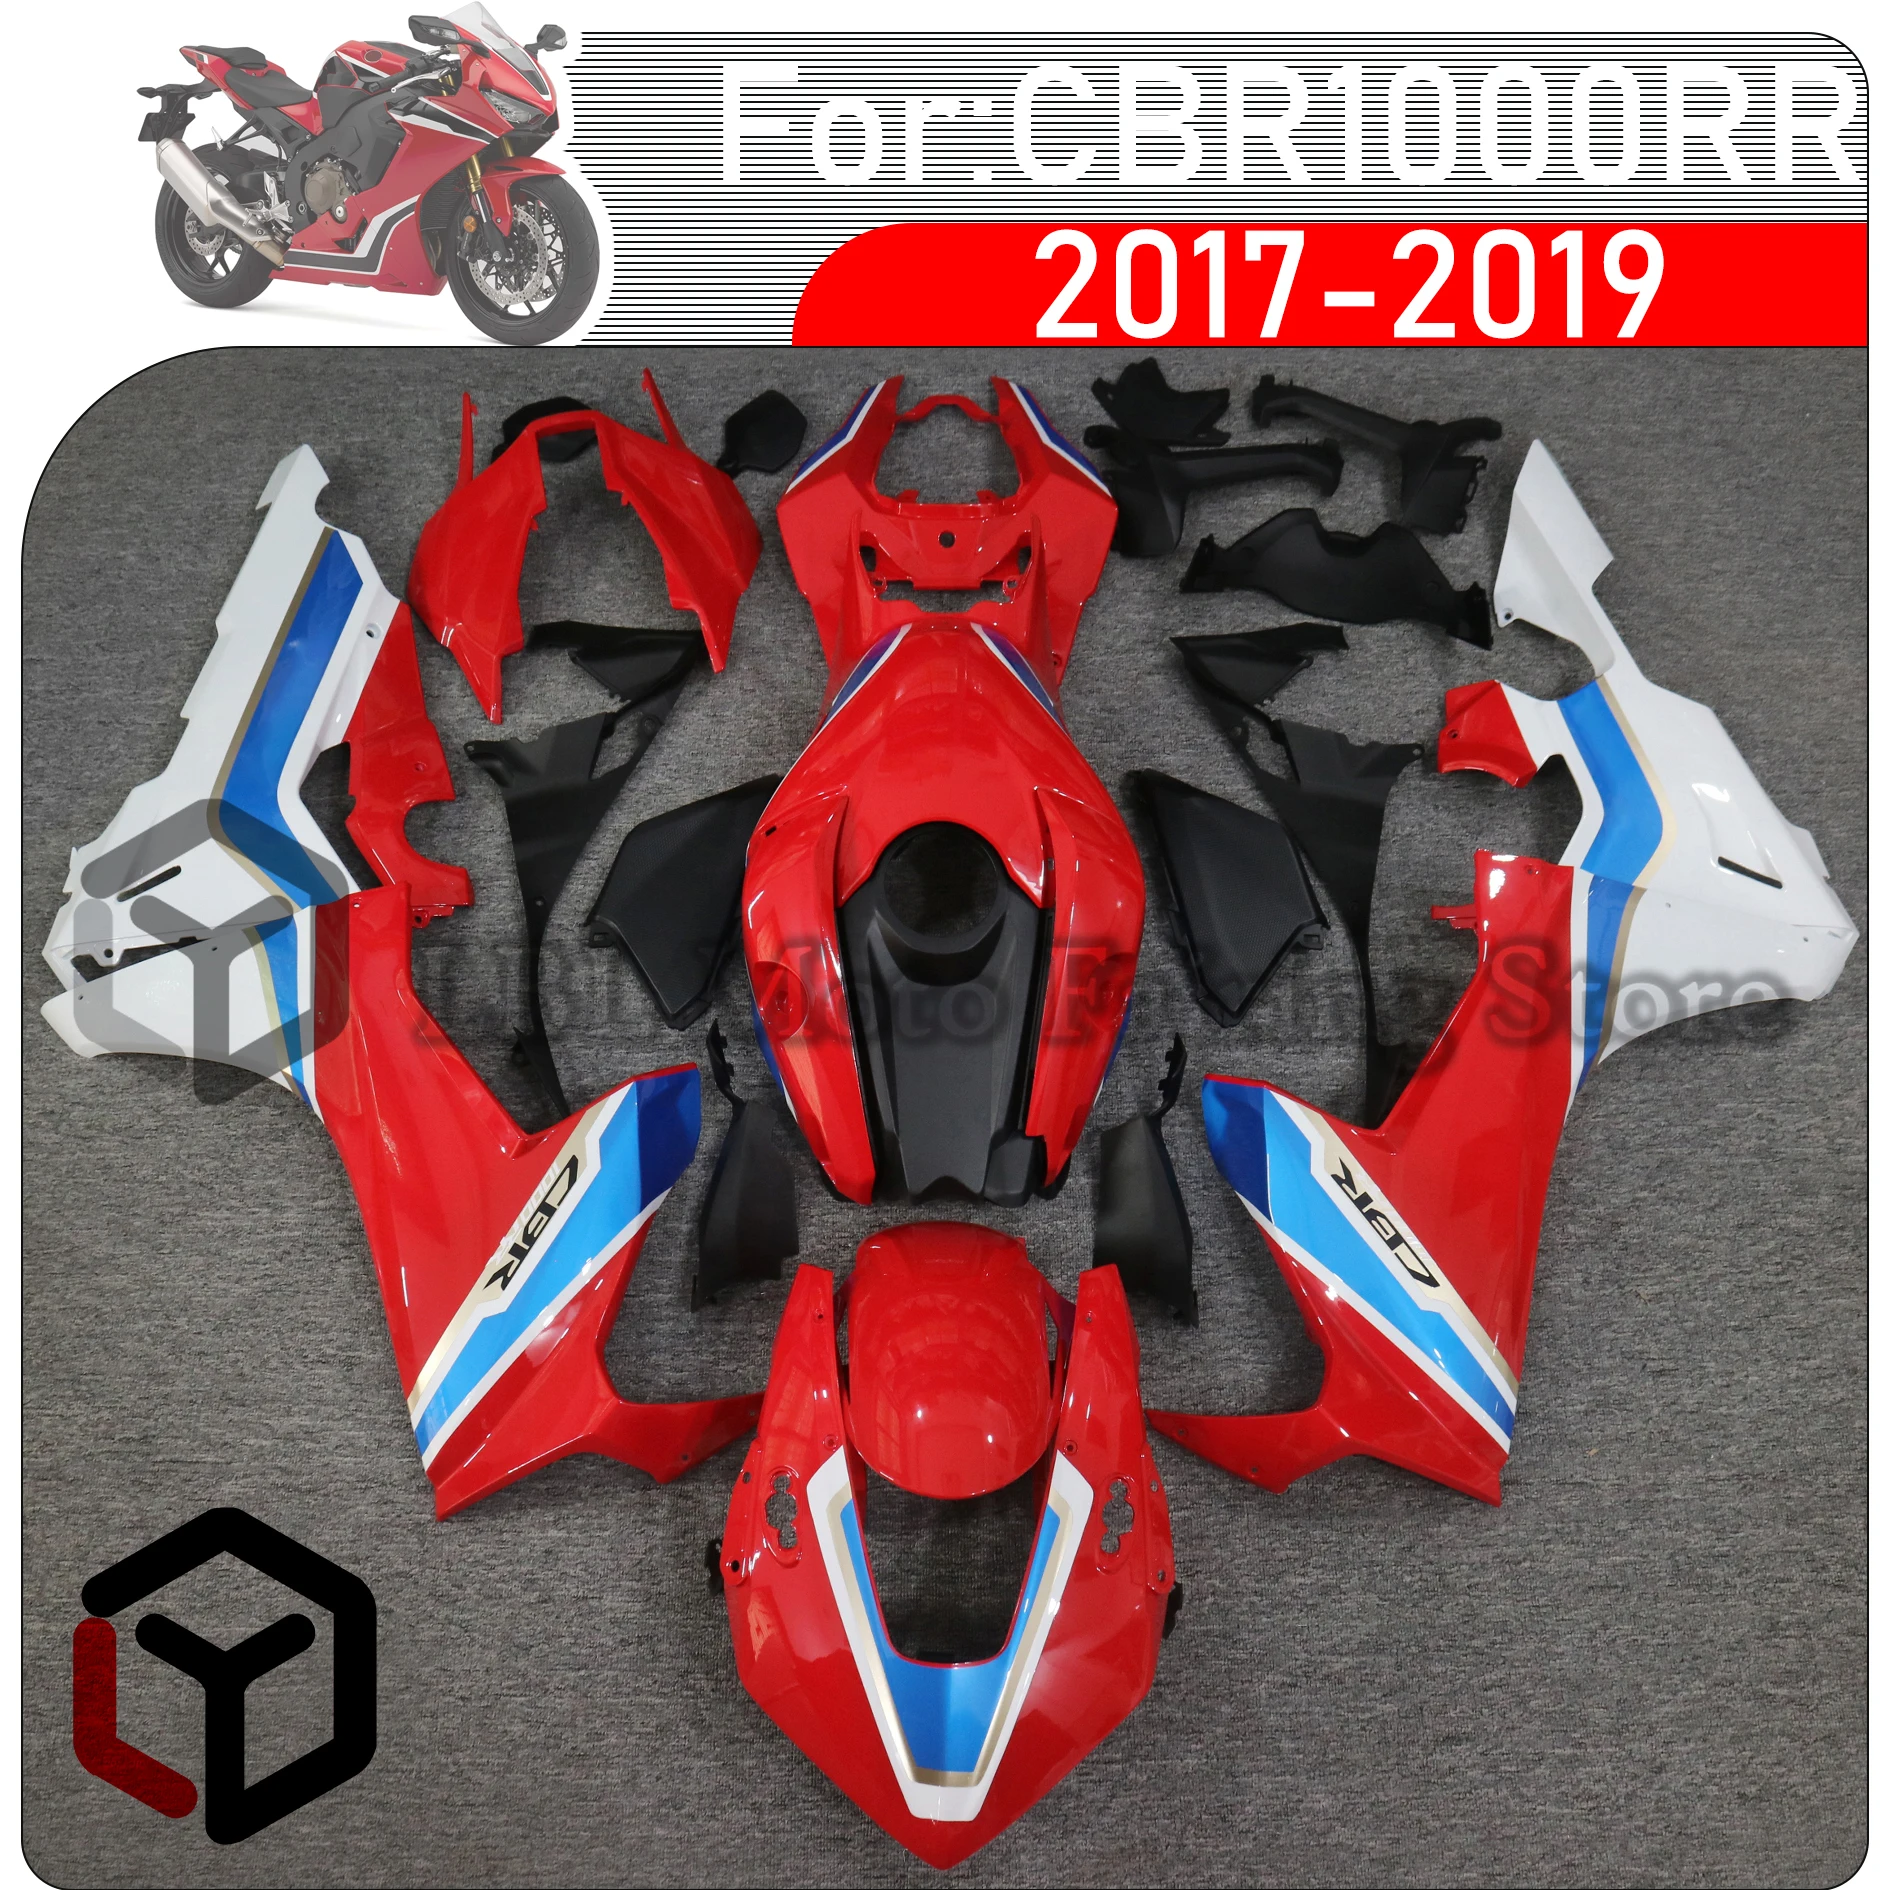 

For HONDA CBR1000RR CBR1000 RR 1000RR 2017 2018 2019 Motorcycle Fairings Injection Mold Painted ABS Plastic Bodywork Kit Sets